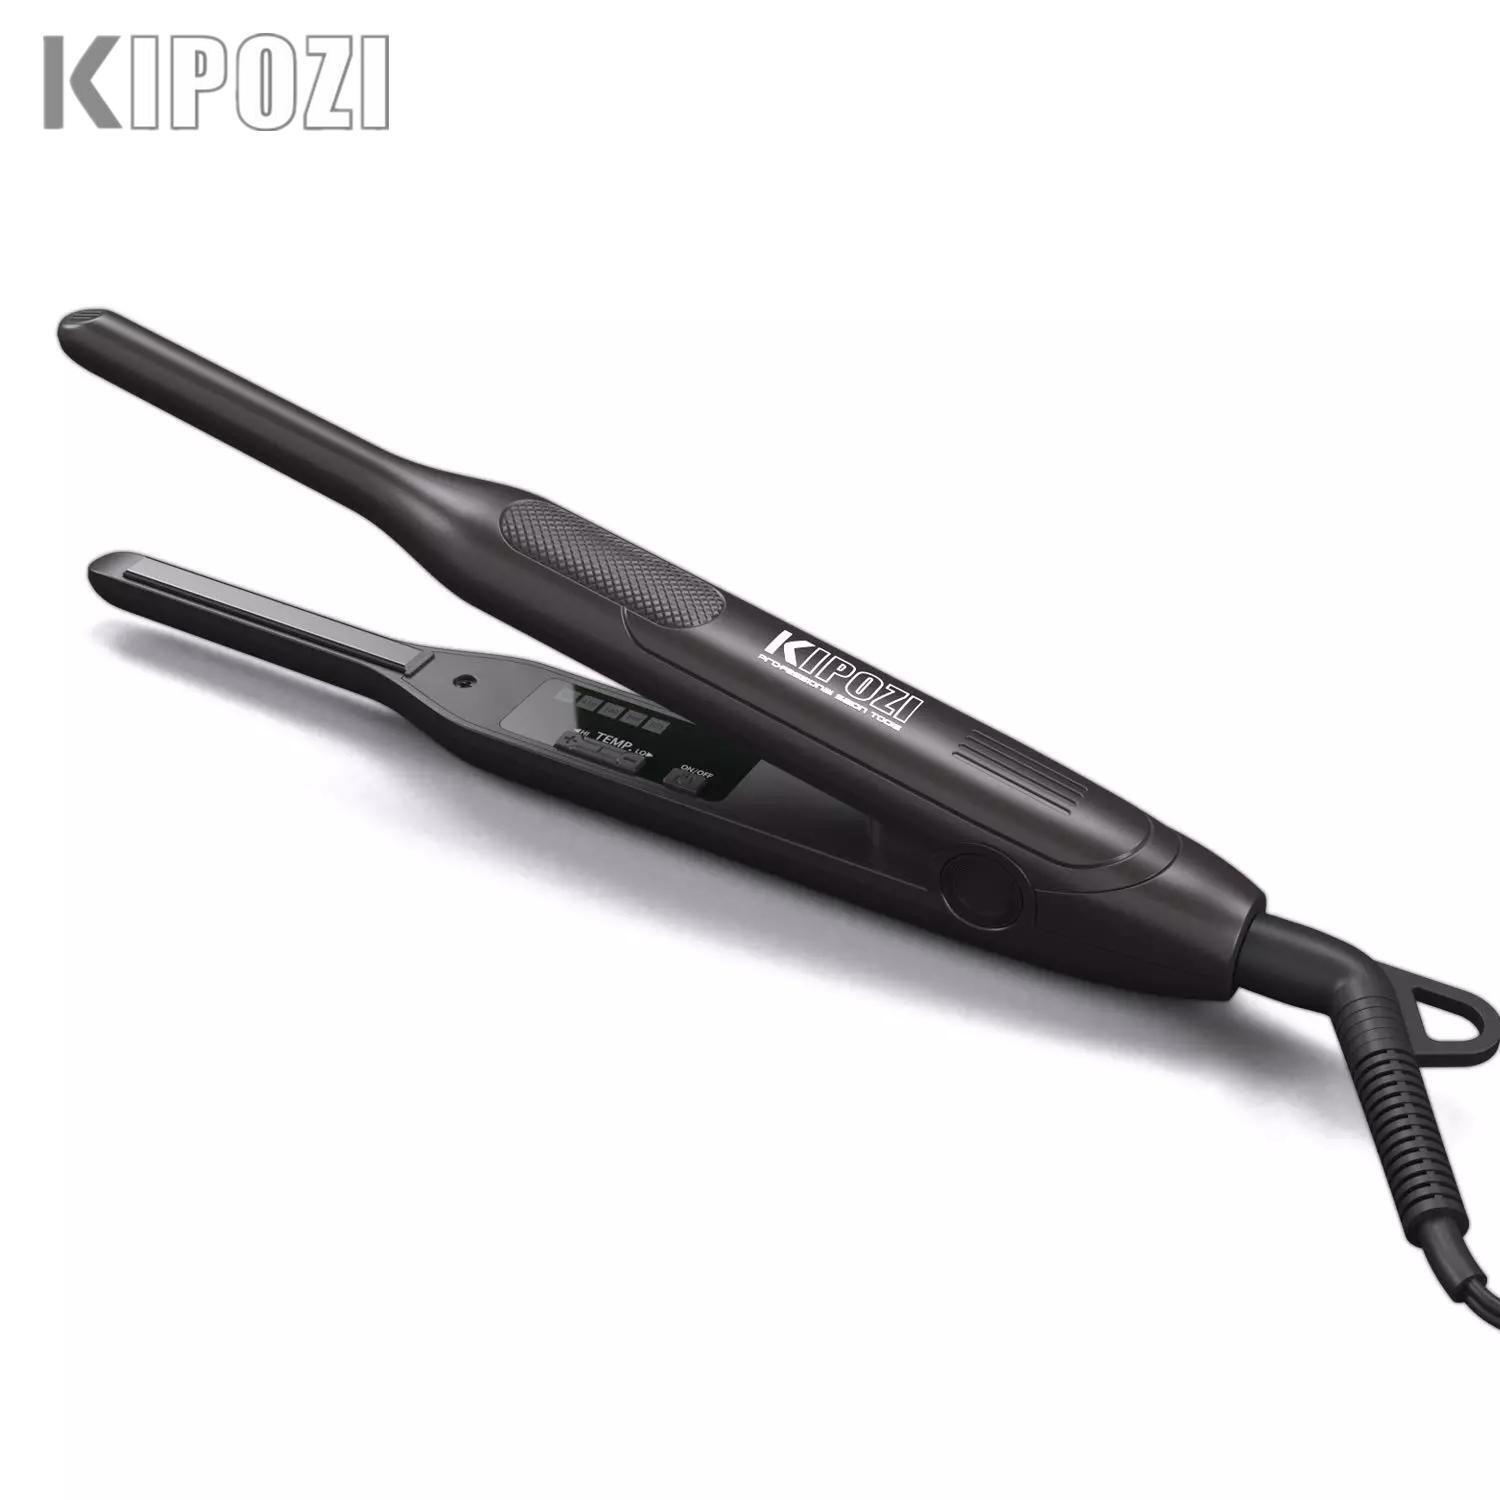 Kipozi Titanium Small Hair Straightener Short Hair Pixue Cut Titanium Dual Volta - $43.53